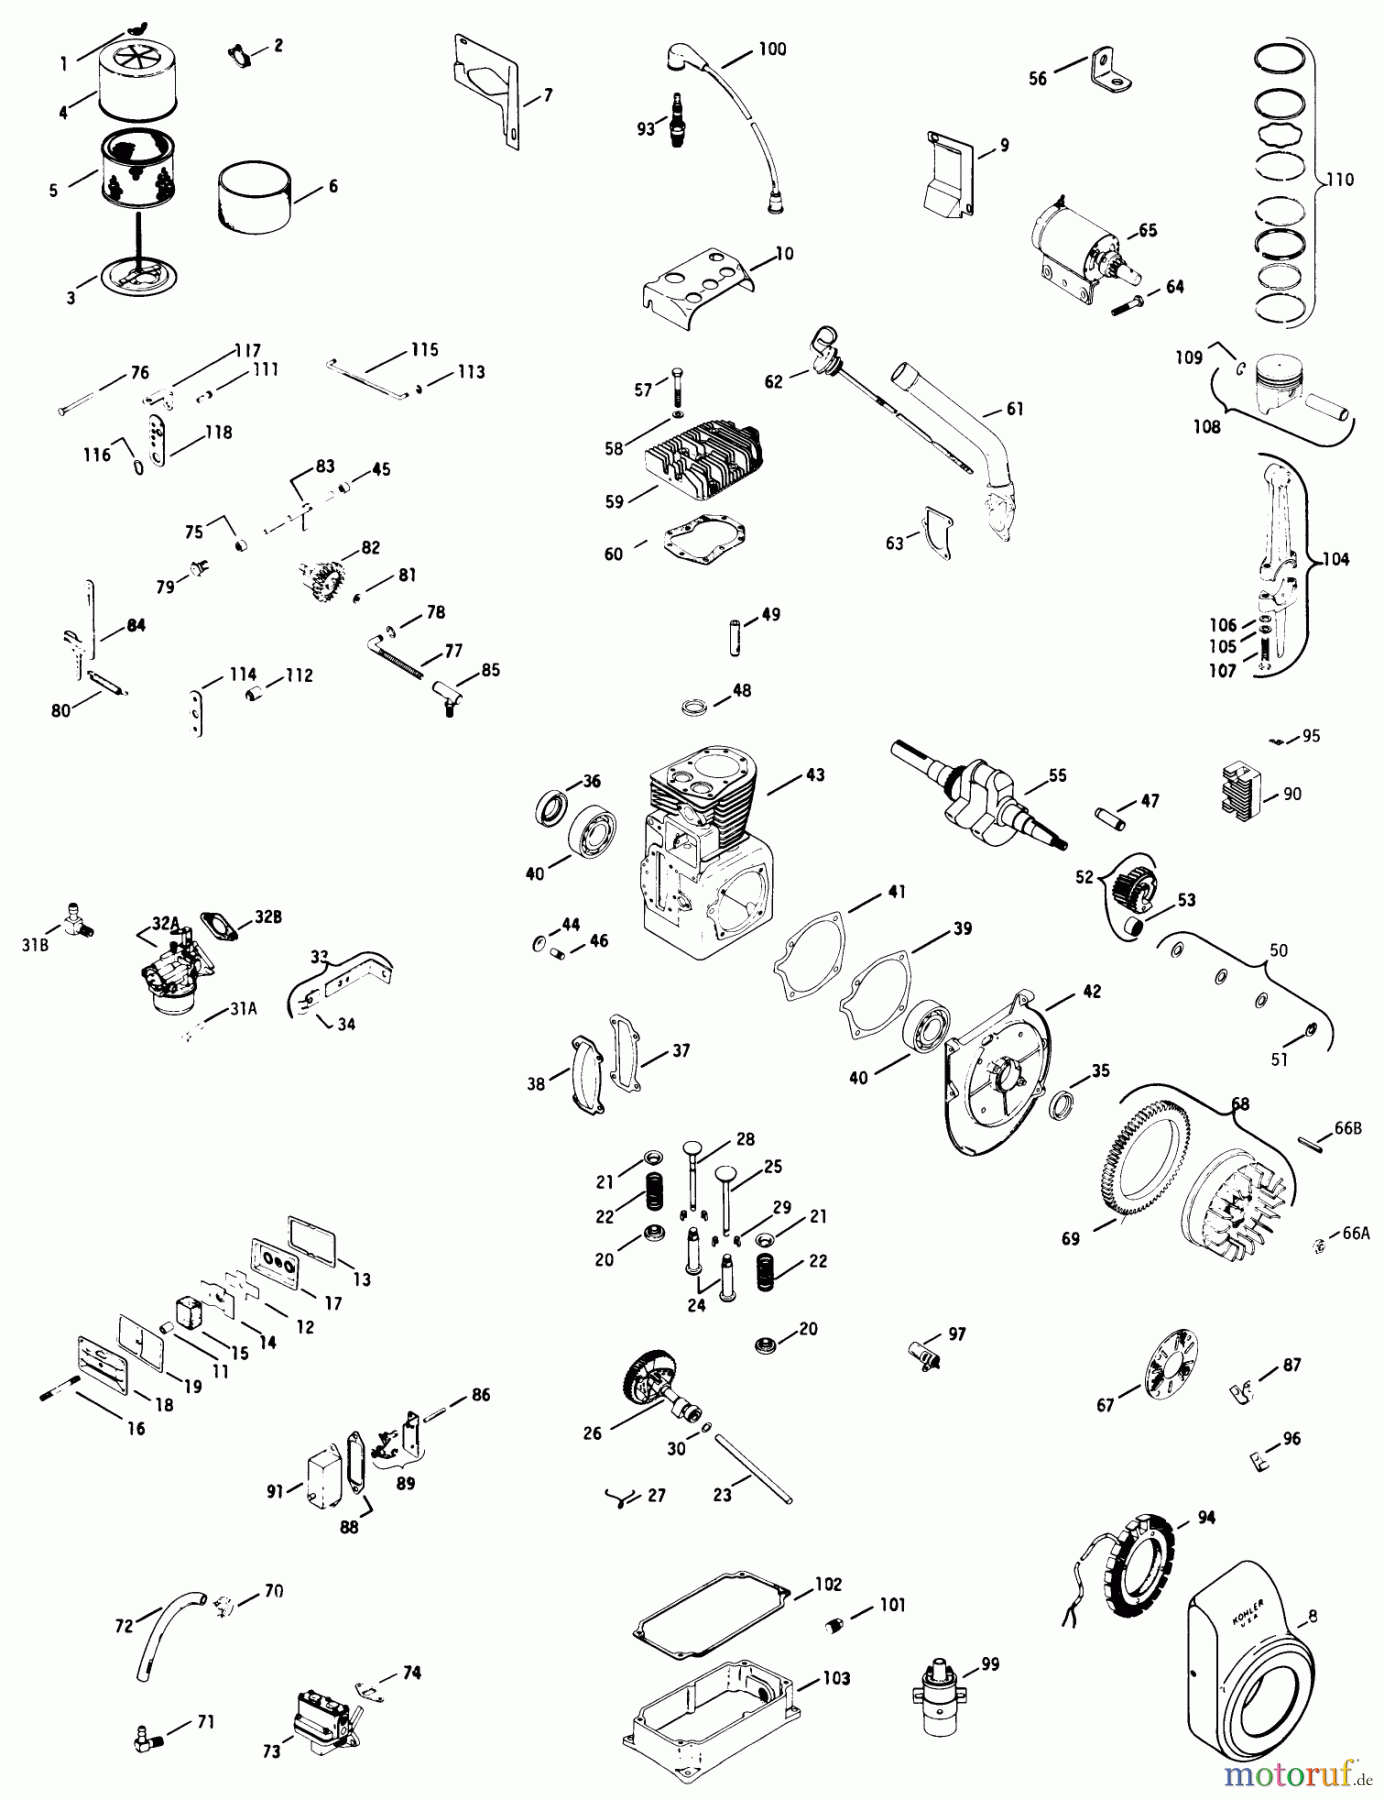  Toro Neu Mowers, Lawn & Garden Tractor Seite 1 71-16KS01 (C-160) - Toro C-160 Automatic Tractor, 1977 16 H.P. ENGINE K341S, SPEC 71128A